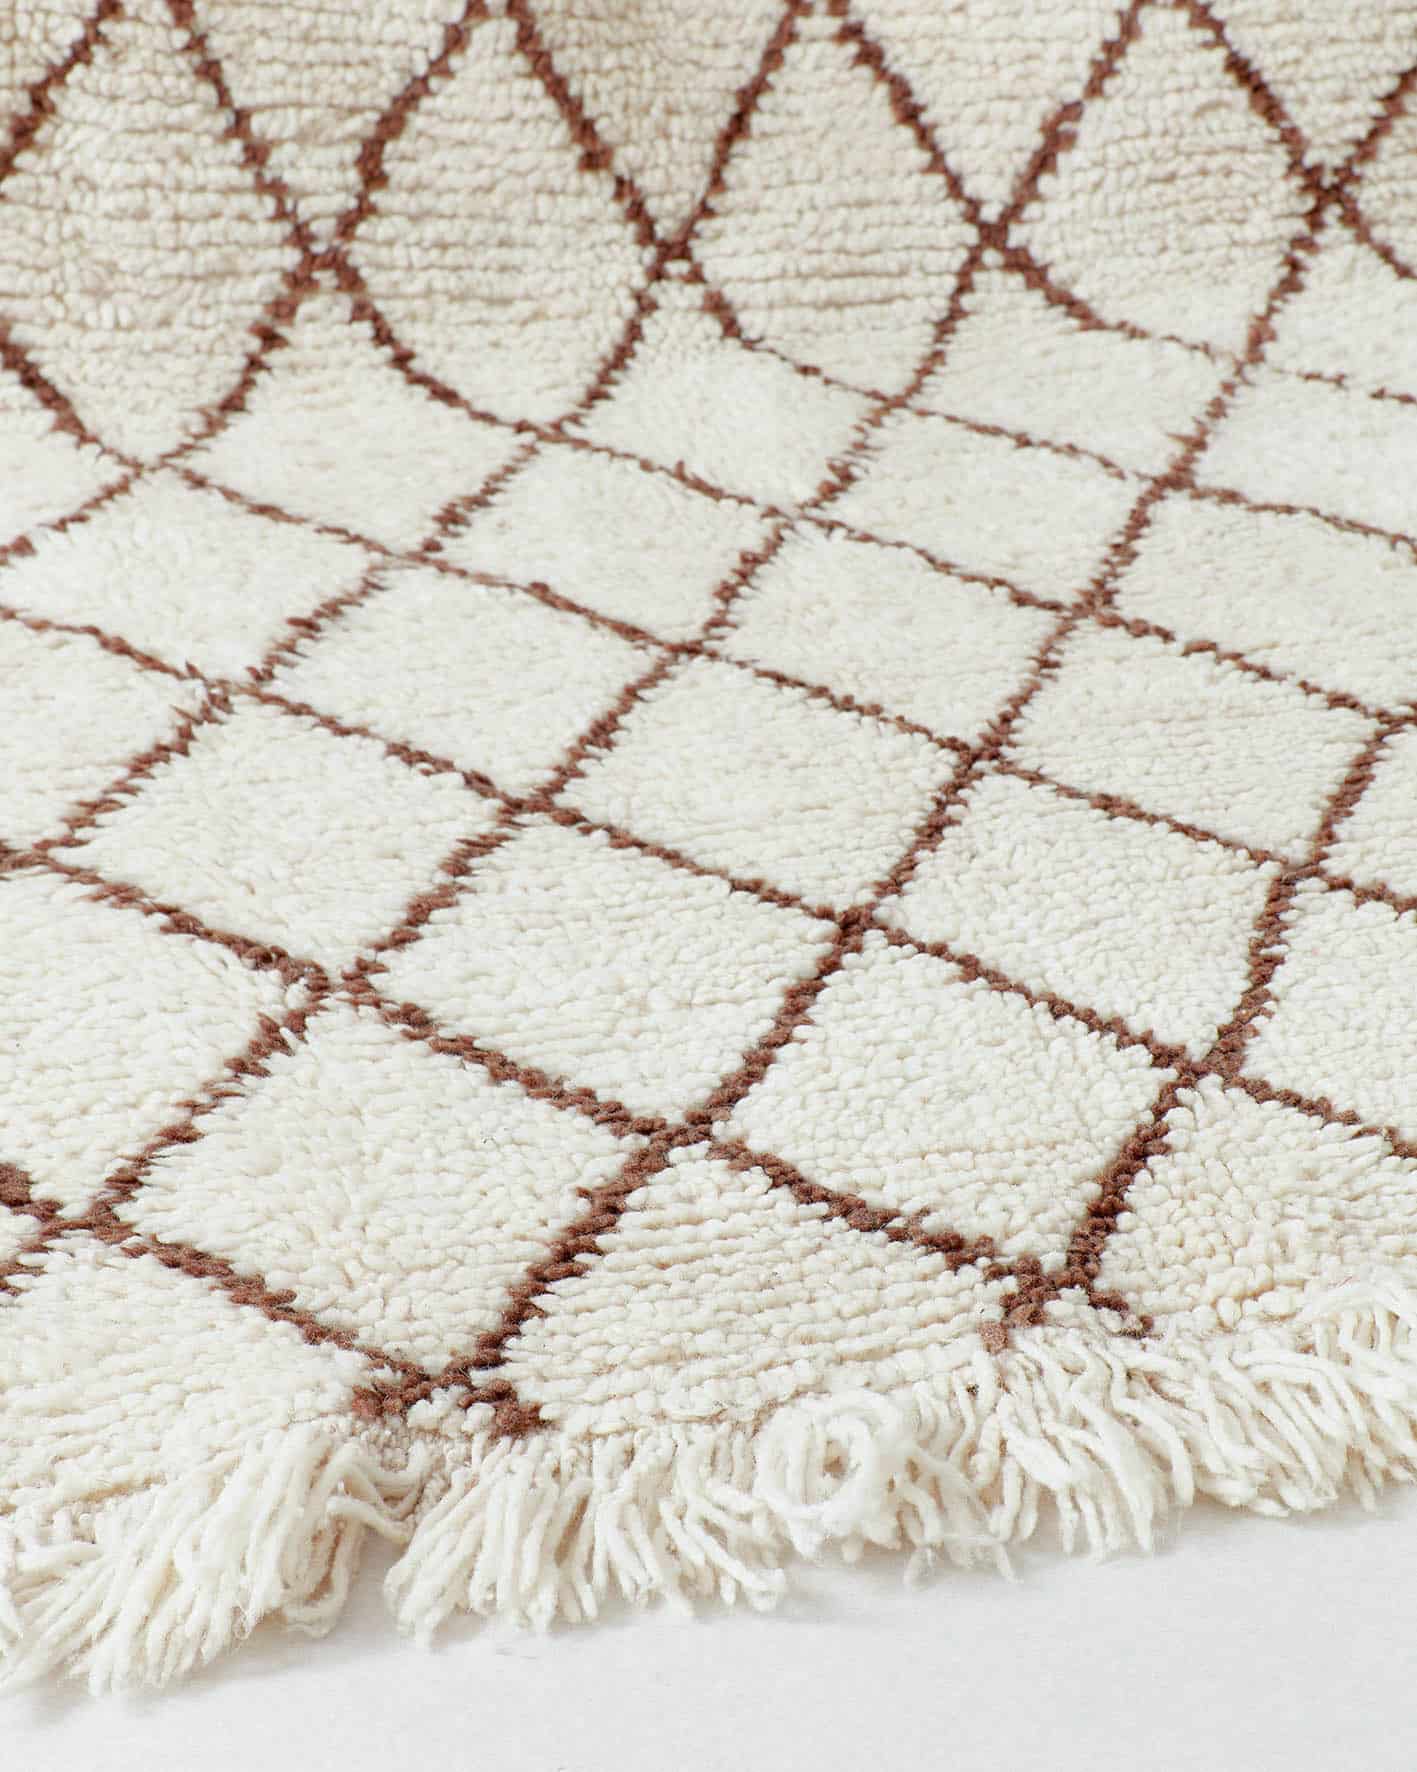 Beni runner with brown lattice pattern, texture